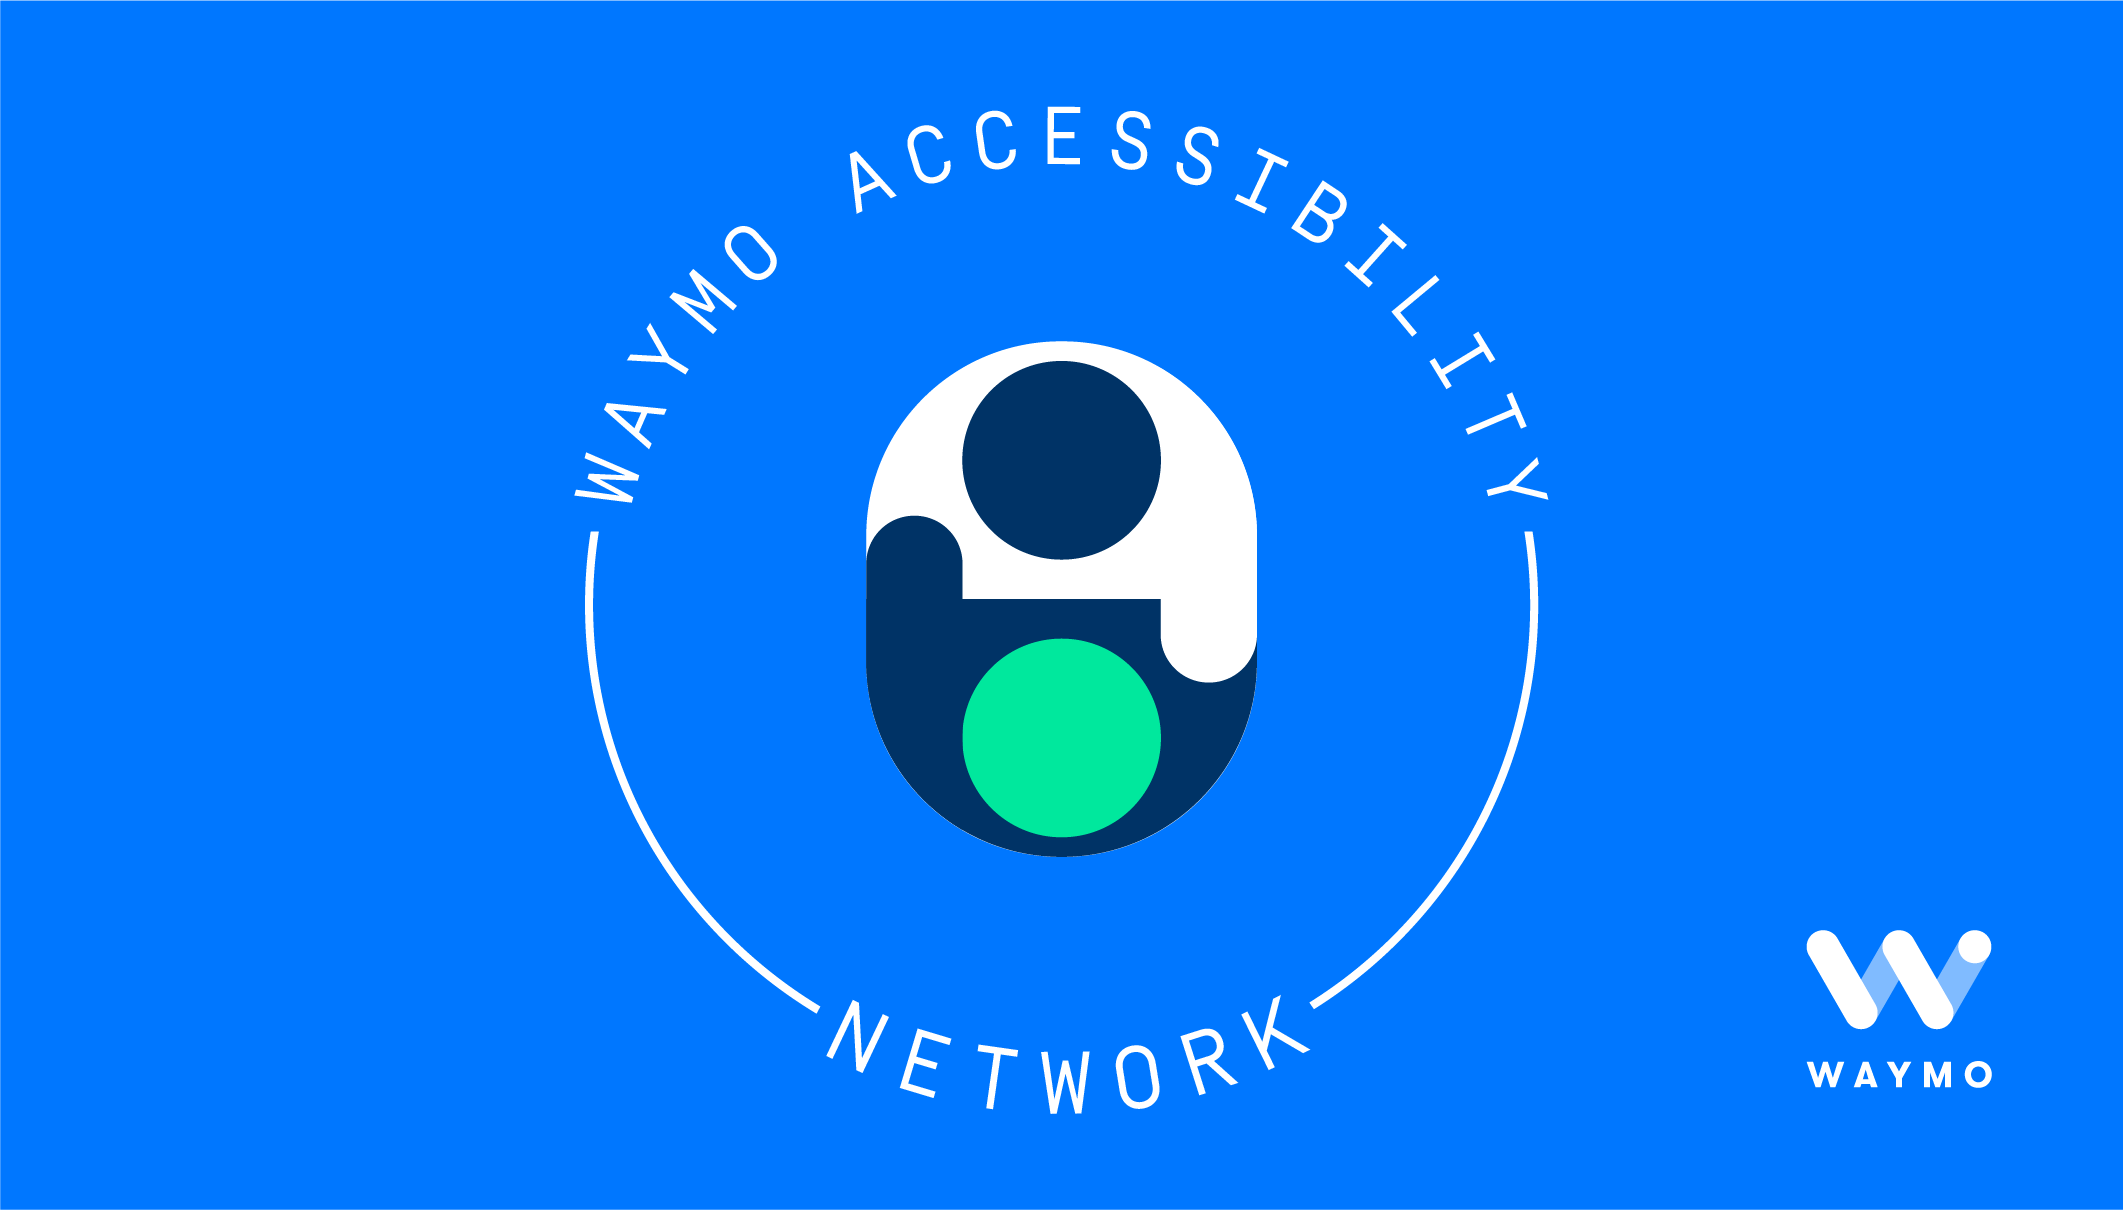 Waymo Accessibility Network